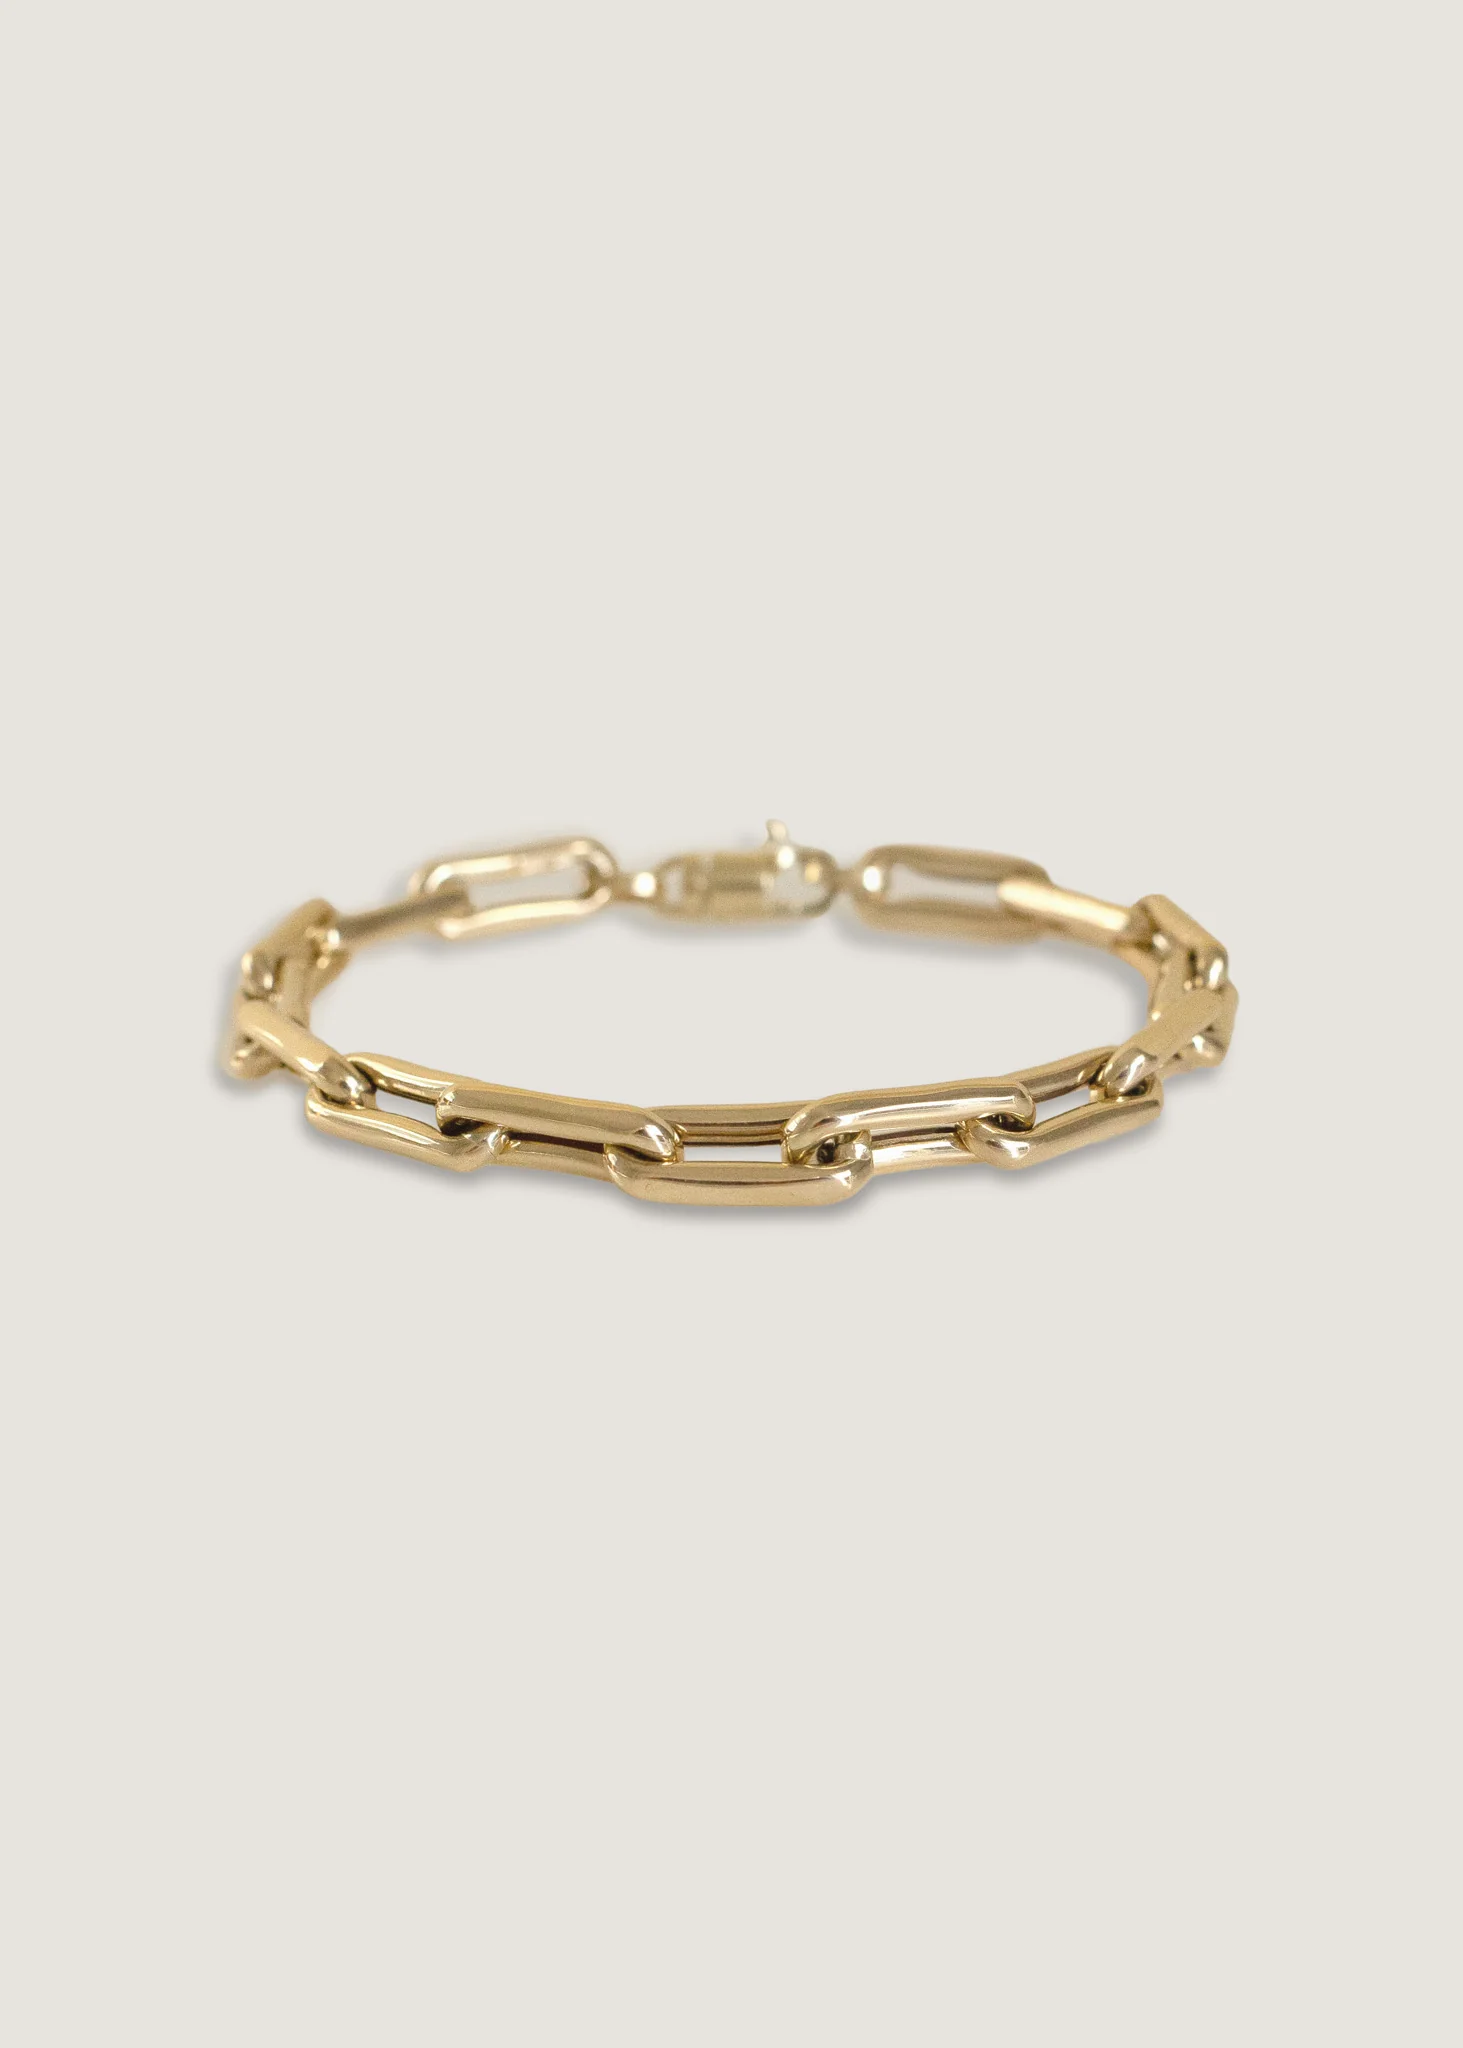 Link Chain Bracelet, $980